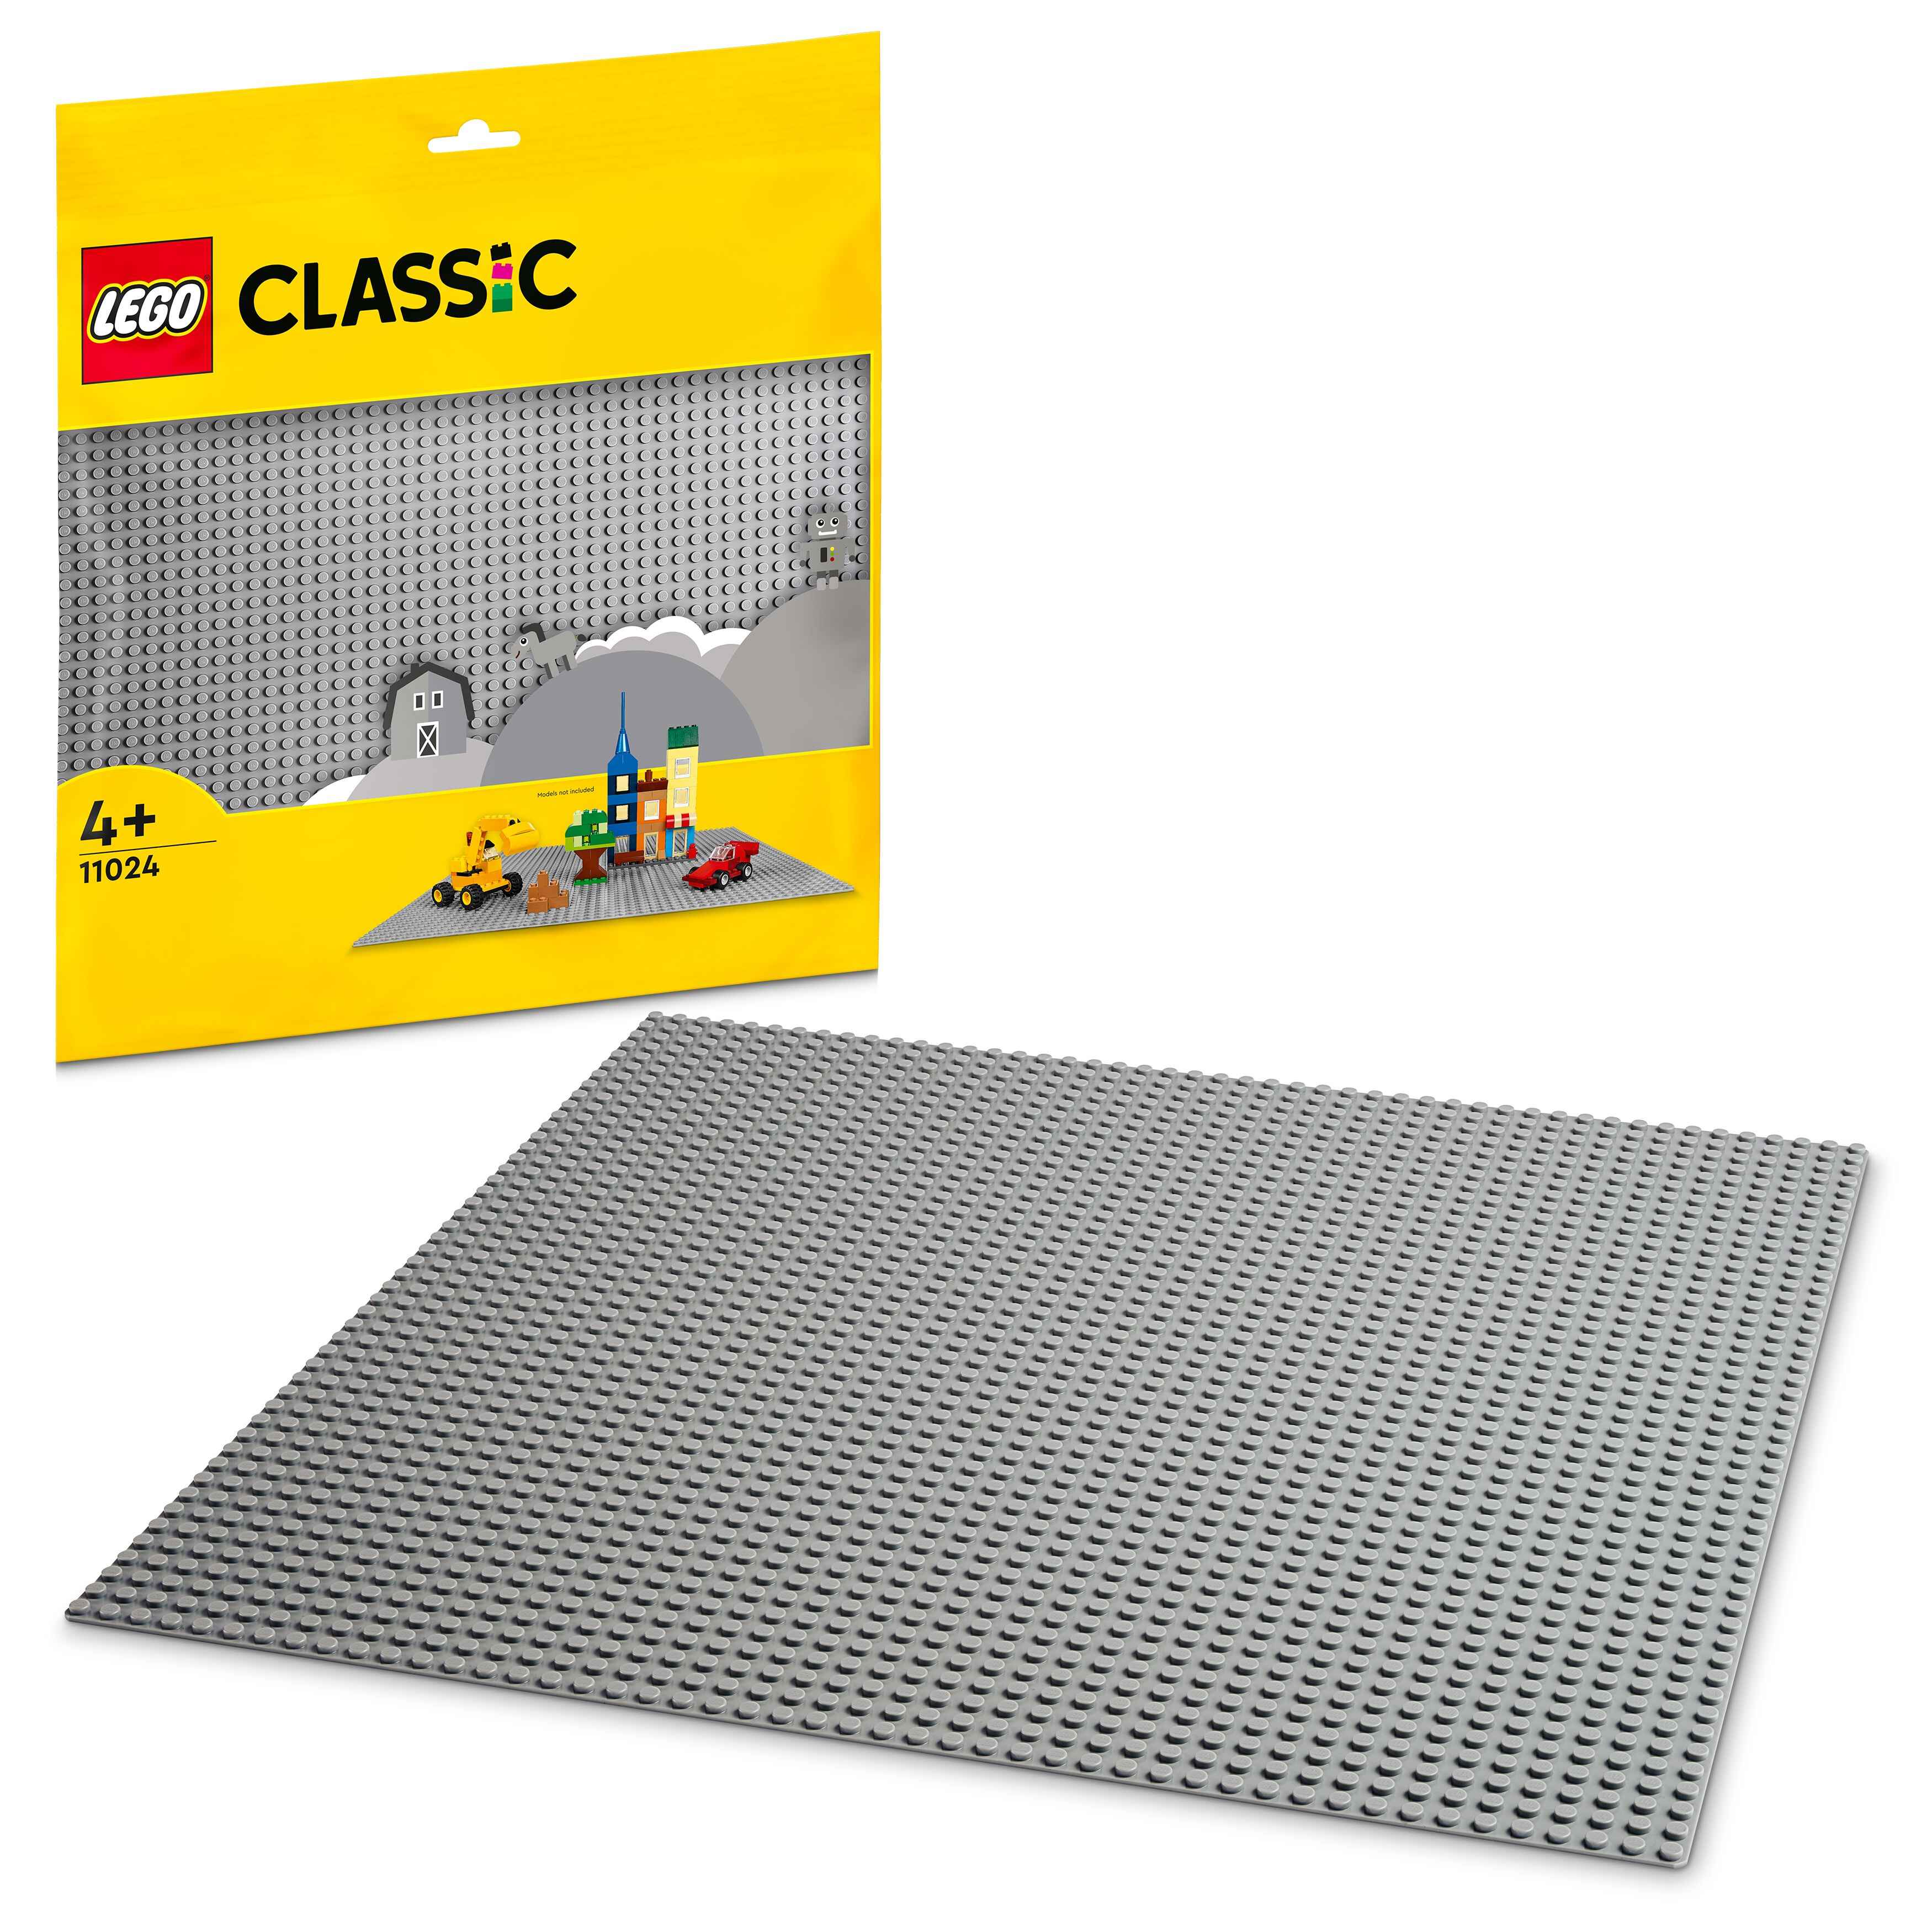 LEGO 11024 Classic Graue Bauplatte, quadratische Grundplatte mit 48x48 Noppen